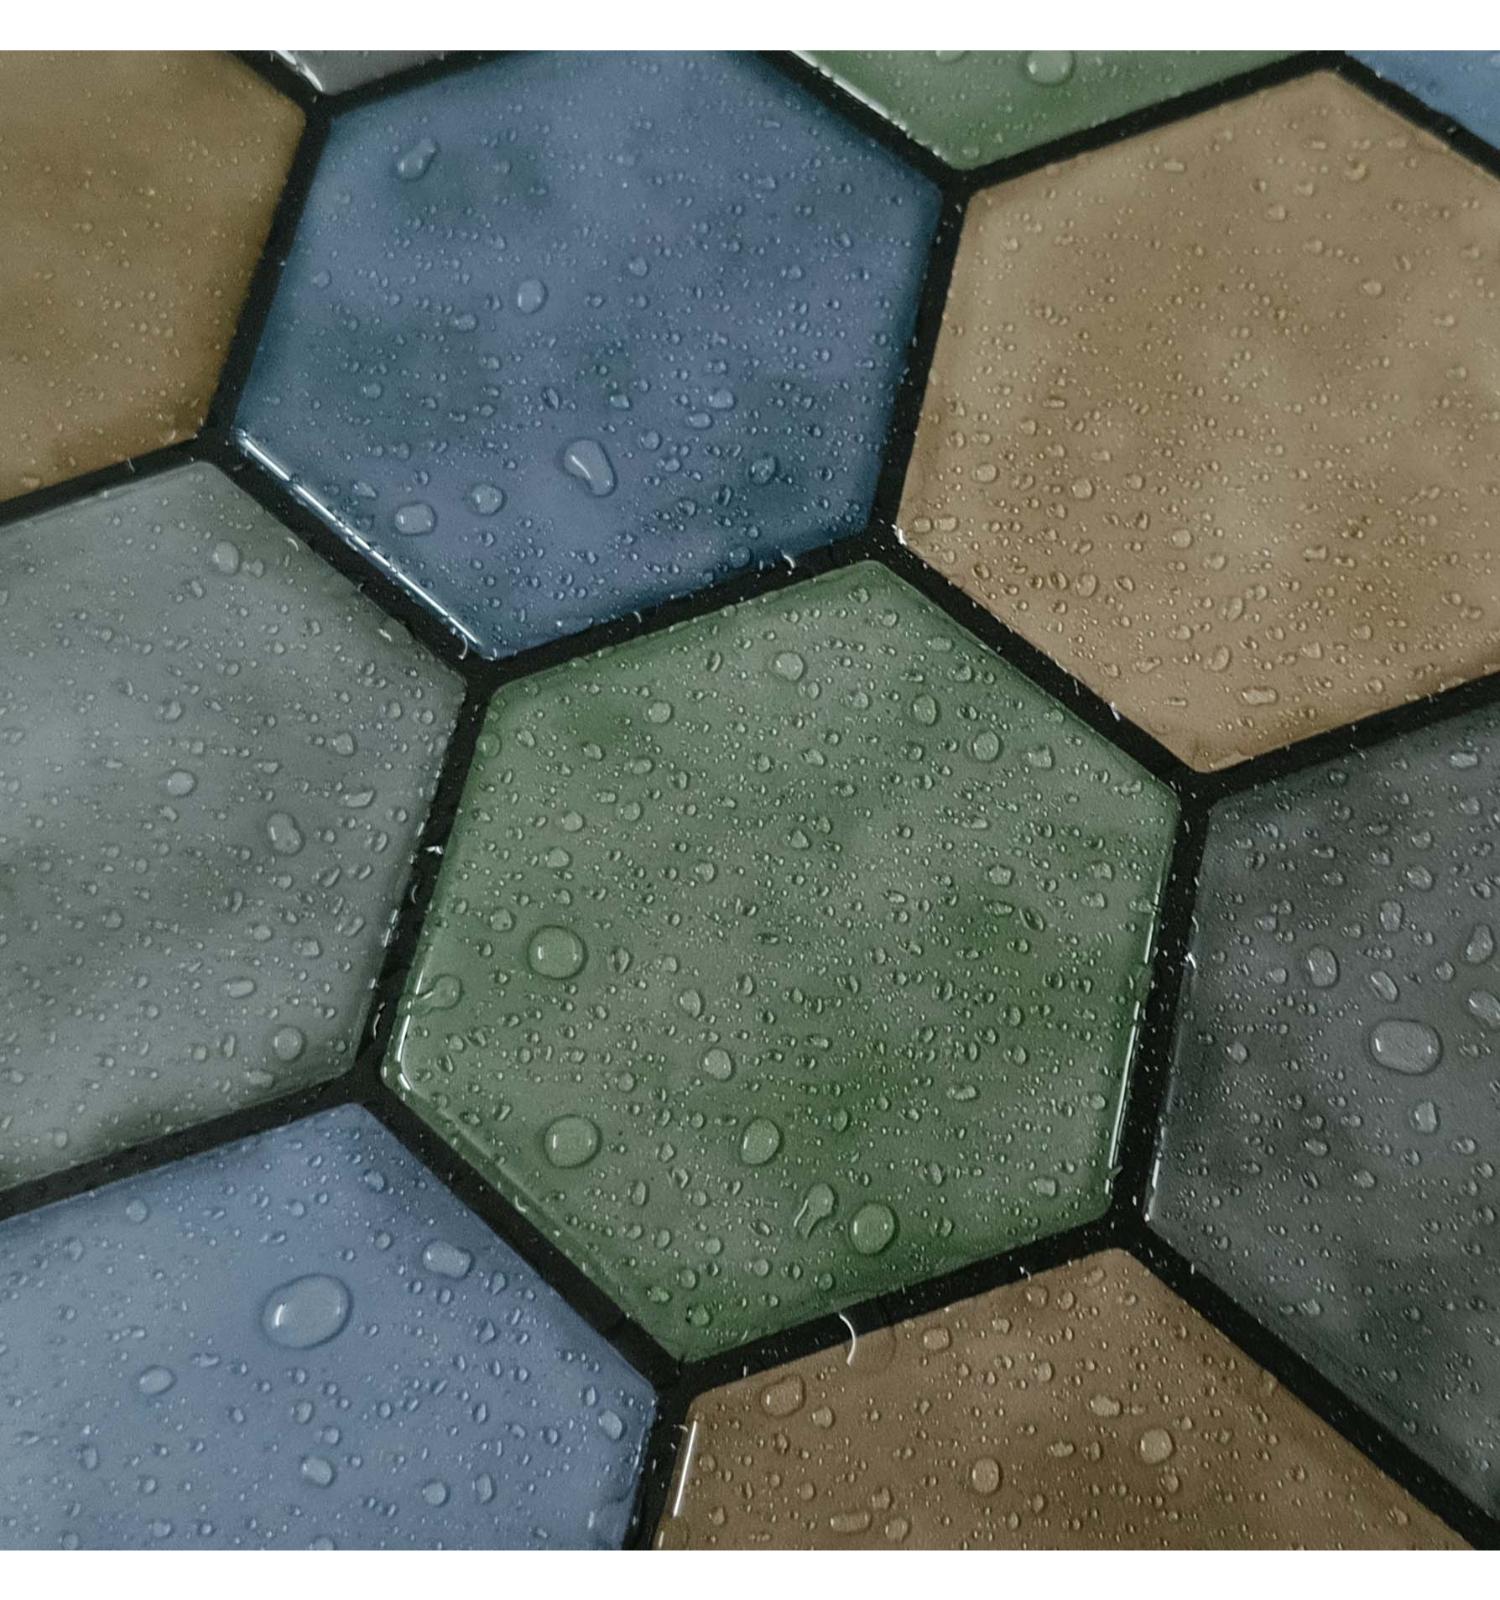 Multicolor peel and Stick Wall Tile | Hexagon Kitchen Backsplash Tiles | self Adhesive Tiles for Home Décor